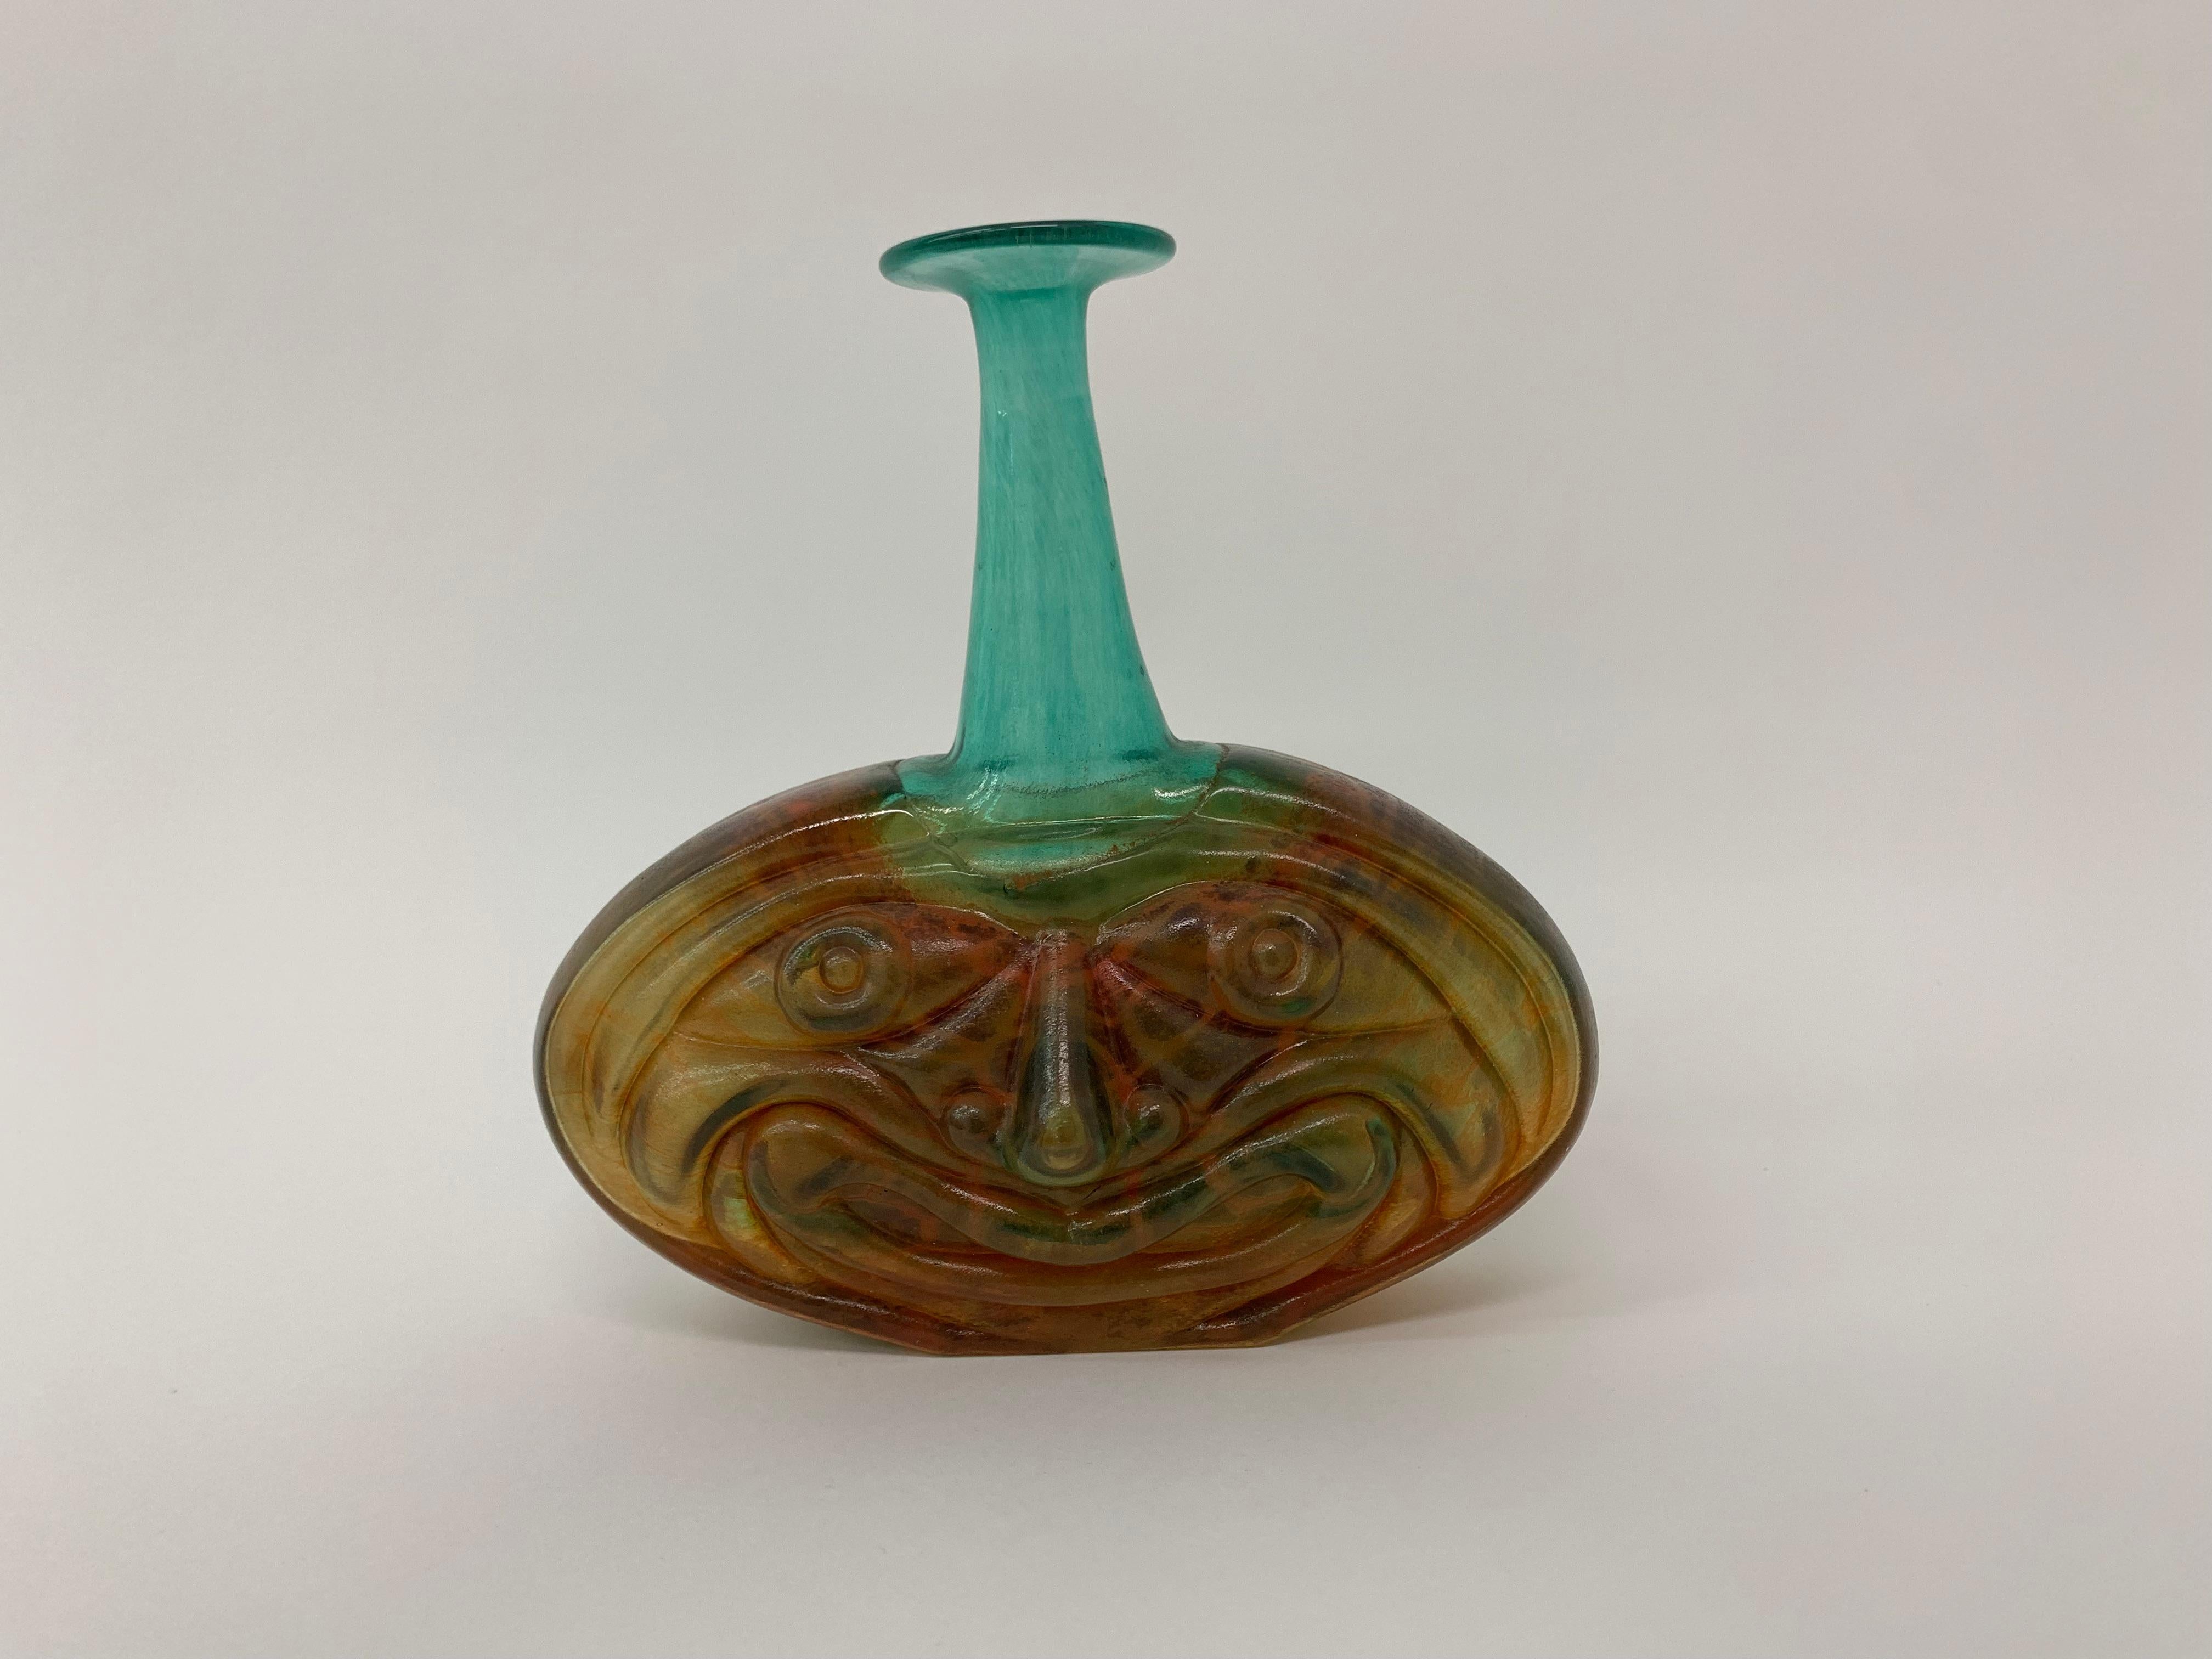 Rare Kjell Engman for Kosta Boda Rio vase, 1970’s

Dimensions: 24cm H, 23cm W, 9cm D
Condition: mint
Period: 1970’s
Designer: Kjell Engman
Producer: Kosta Boda
Material: Glass
Origin: Sweden